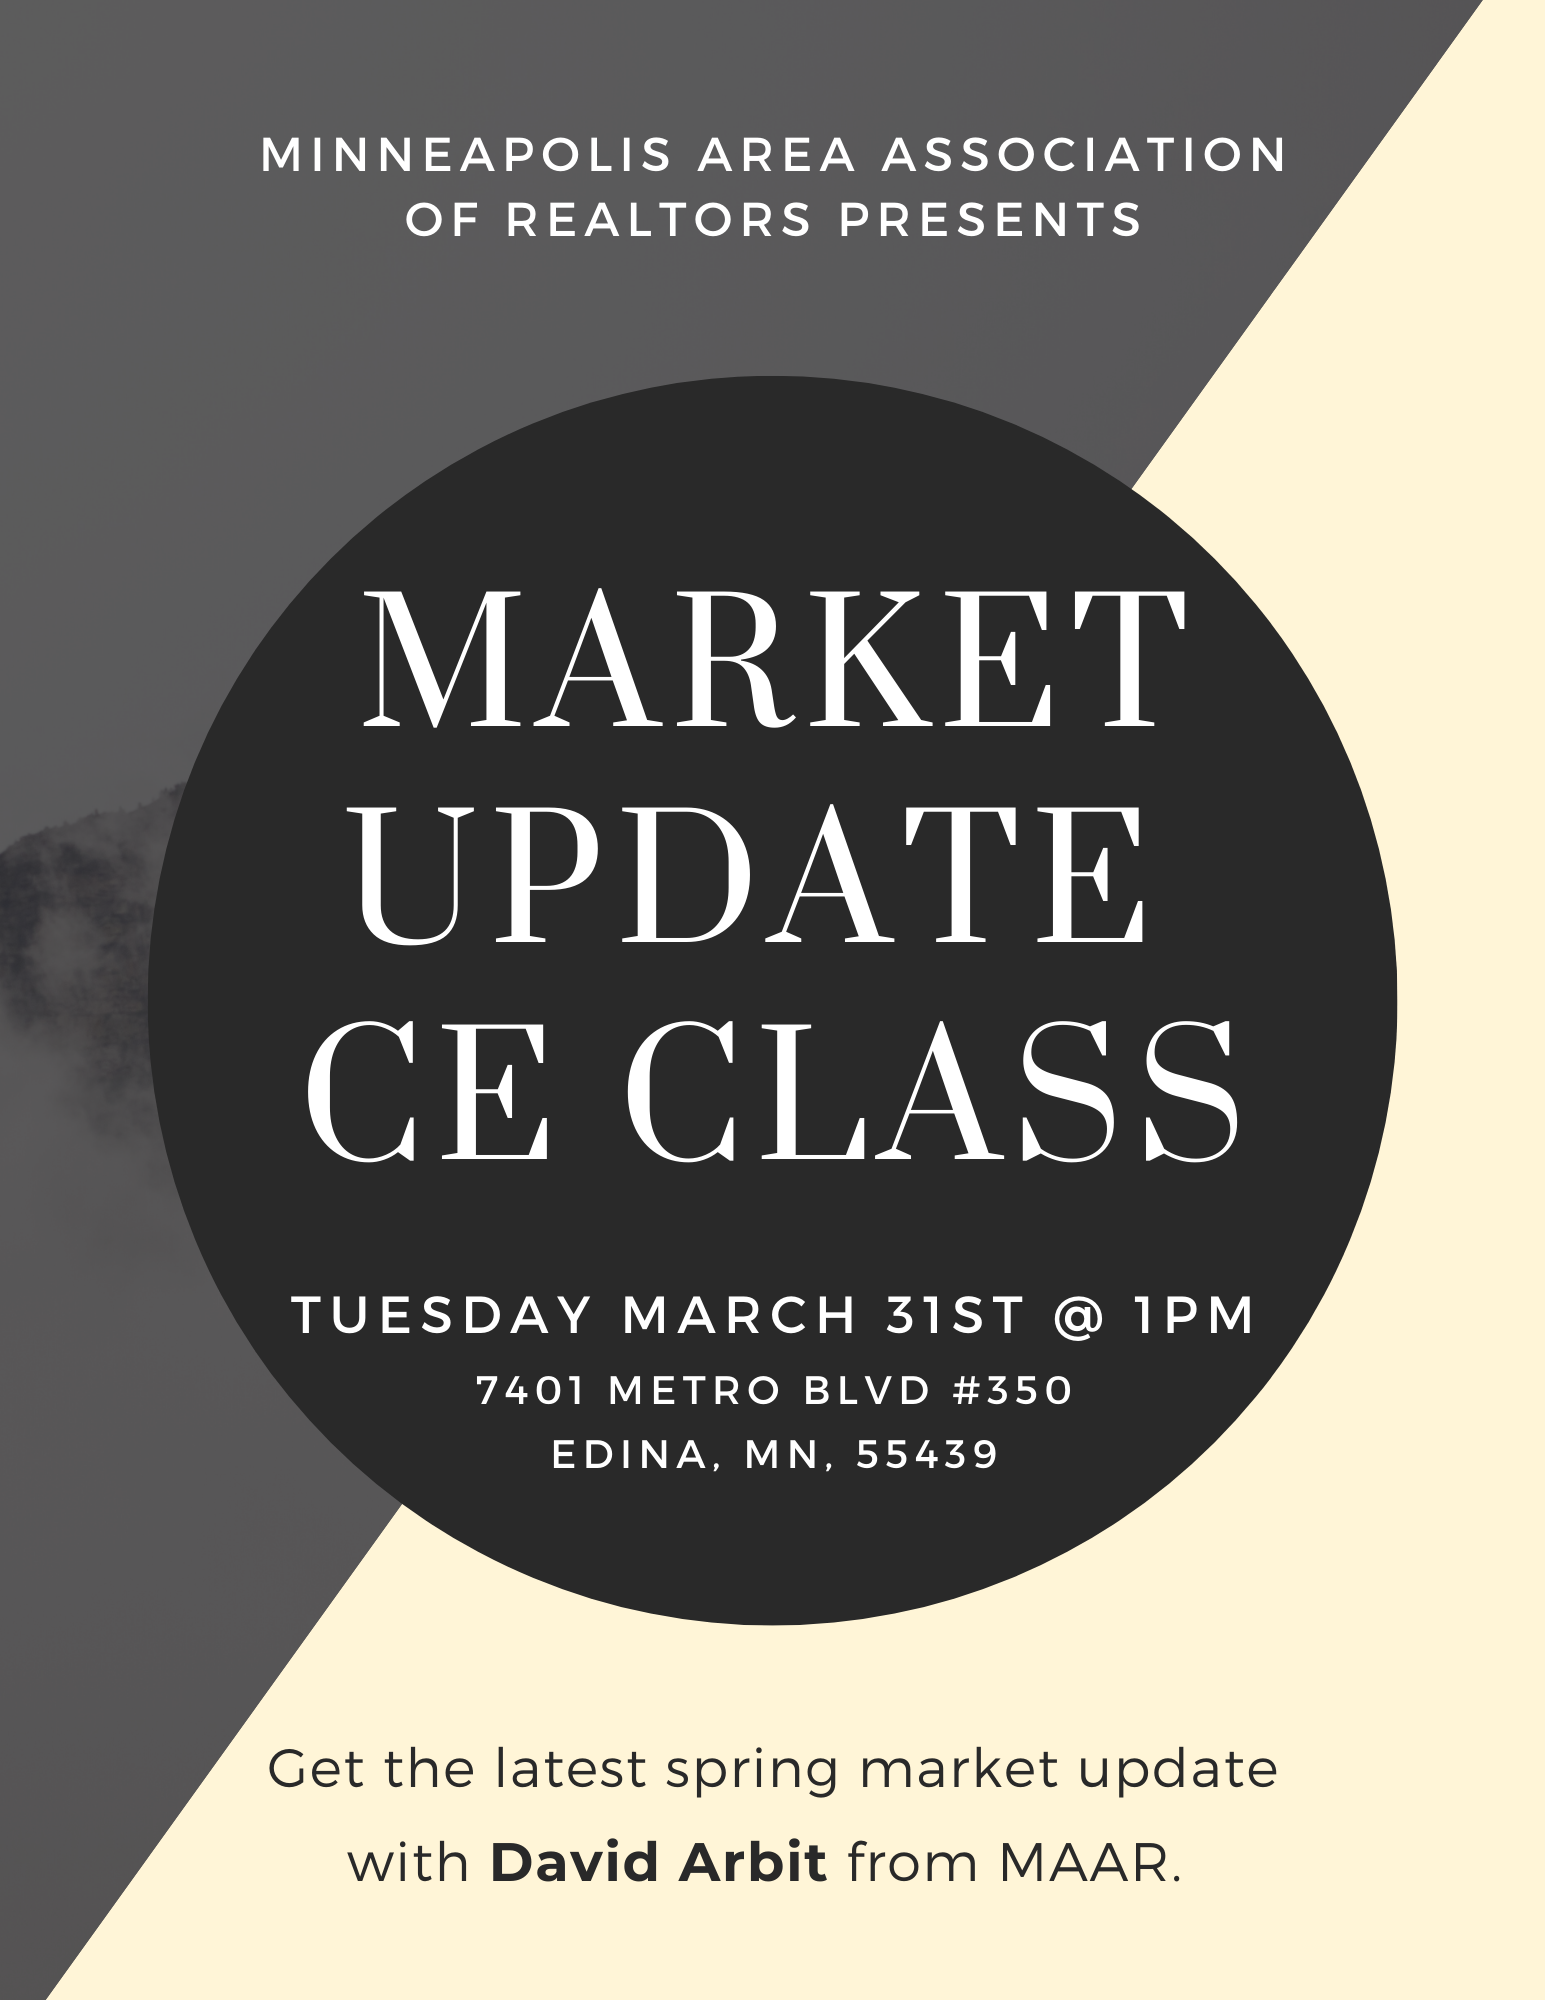 Market Update - CE Class with David Arbit from MAAR